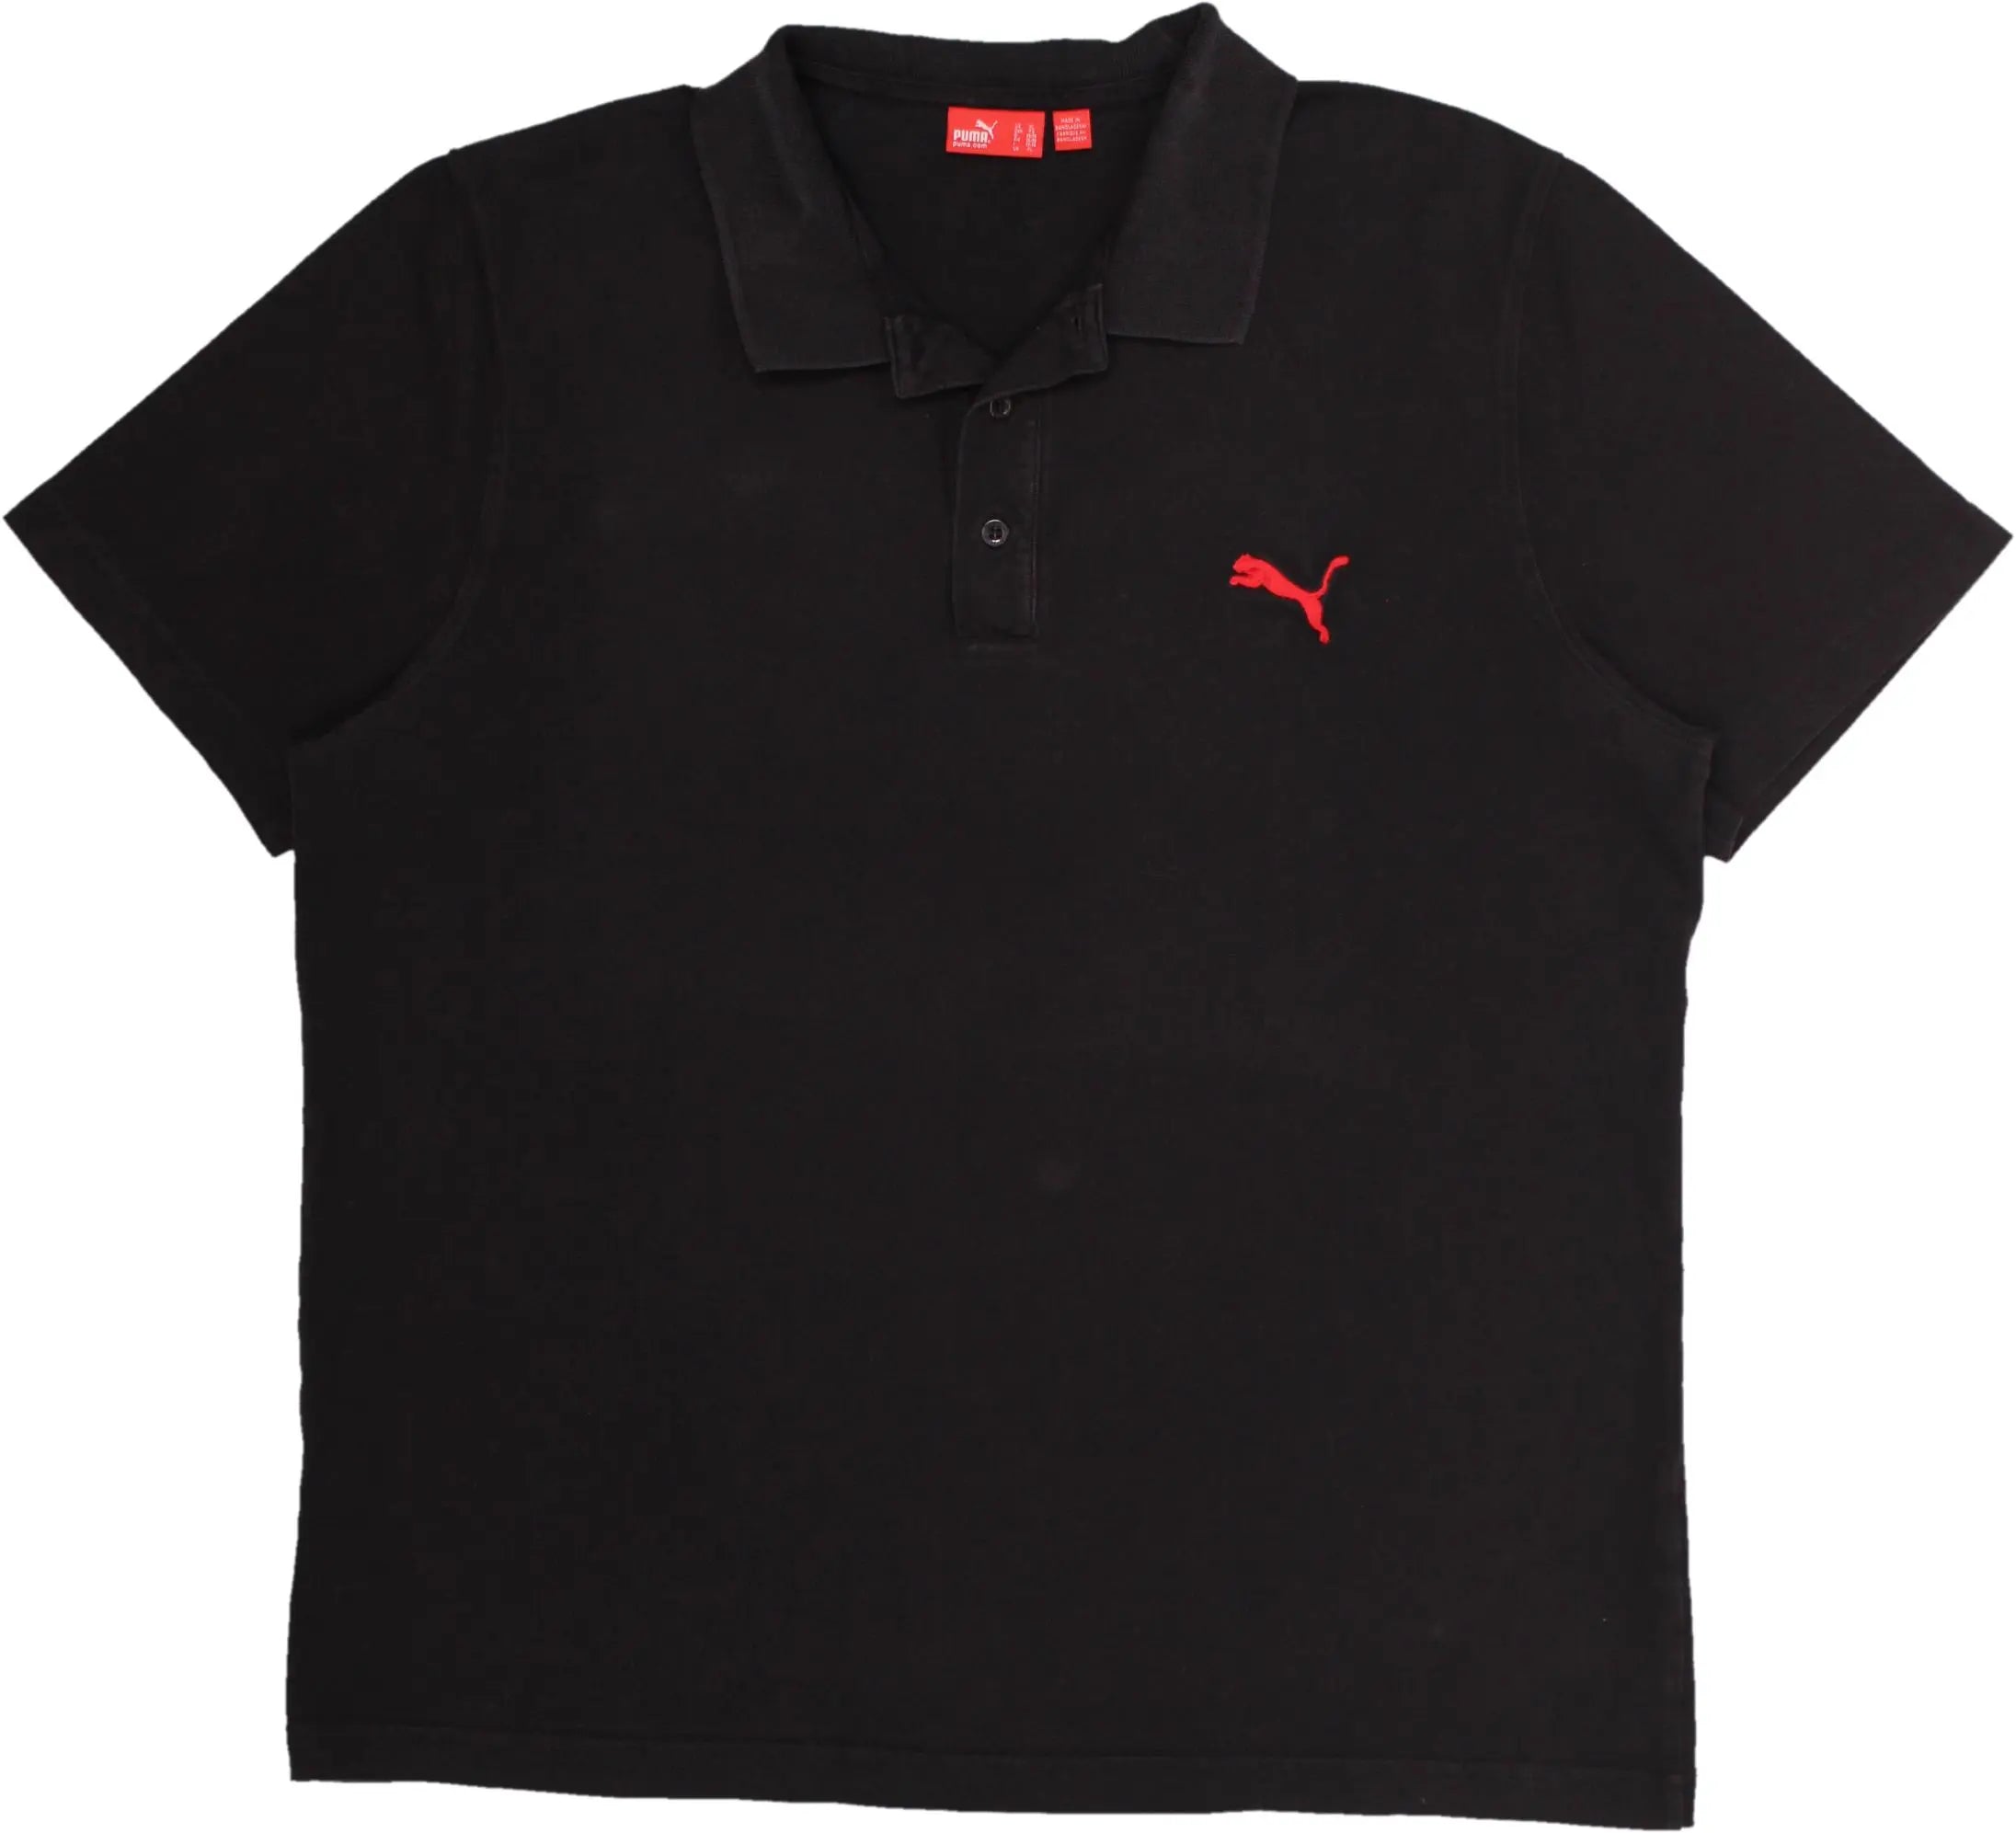 Puma - Black Polo Shirt by Puma- ThriftTale.com - Vintage and second handclothing